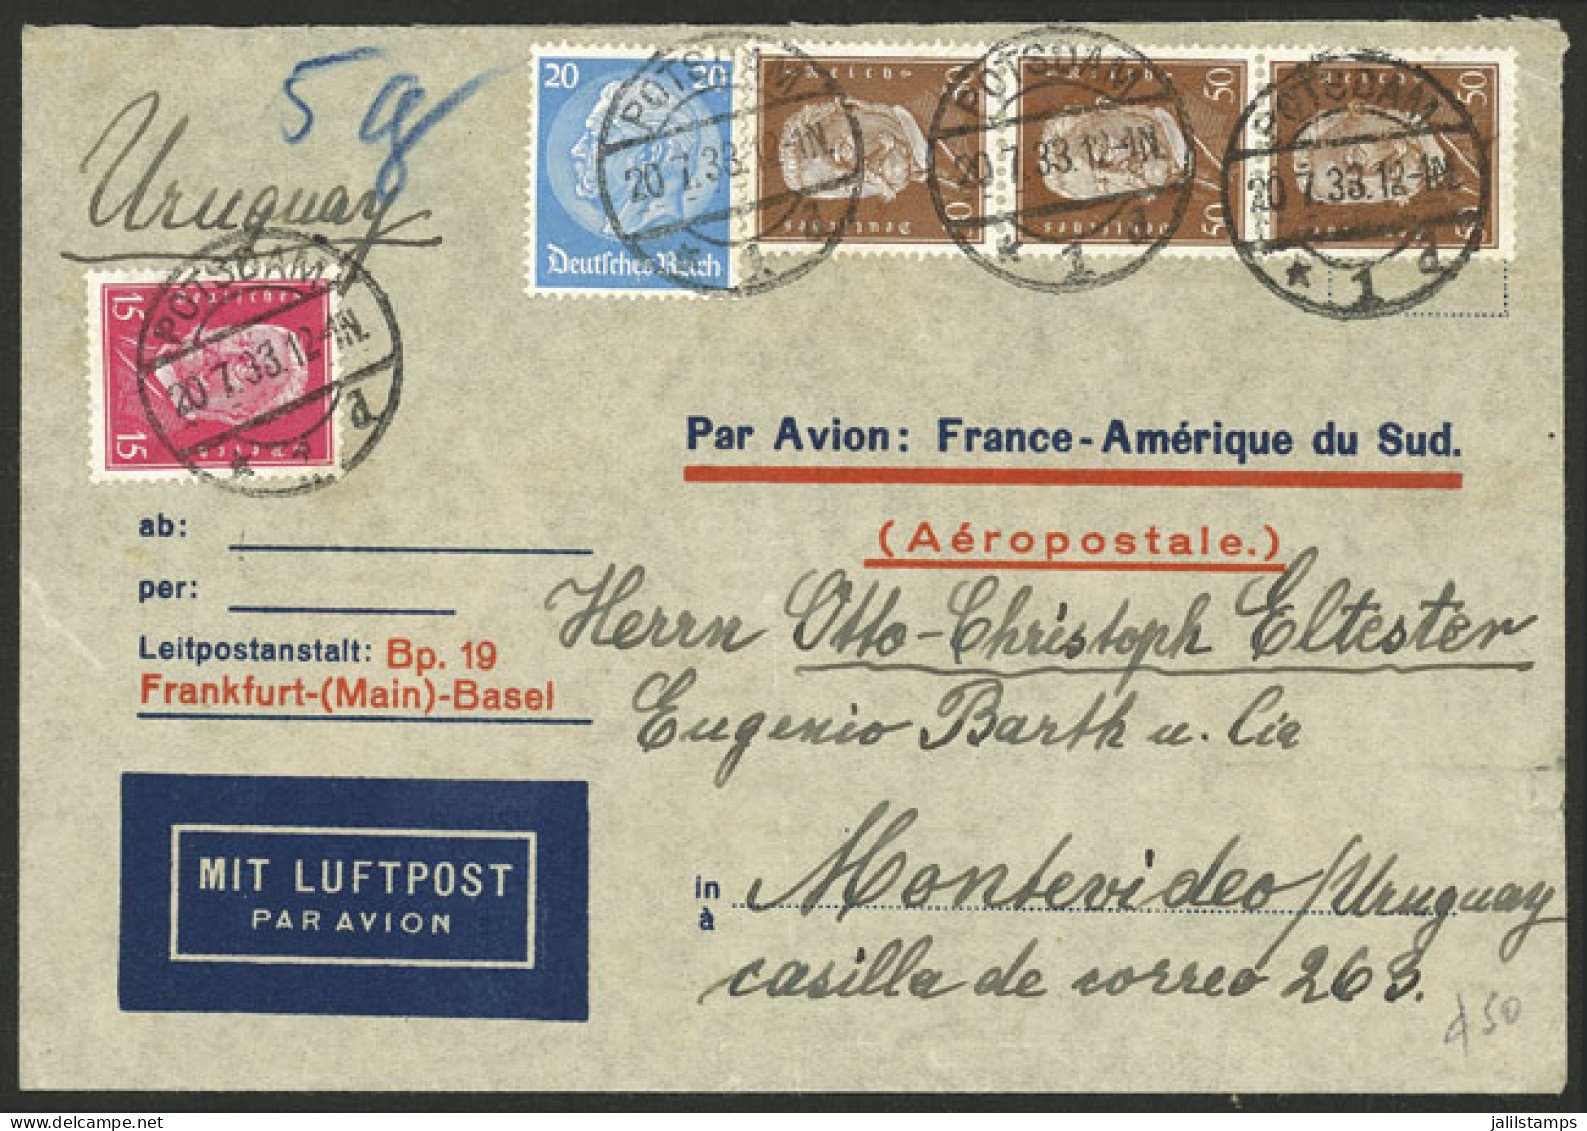 GERMANY: 20/JUL/1933 Postdam - Uruguay, Airmail Cover Sent By Air France Con Franqueo De 1,85Mk., Al Dorso Tiene Tránsit - Covers & Documents